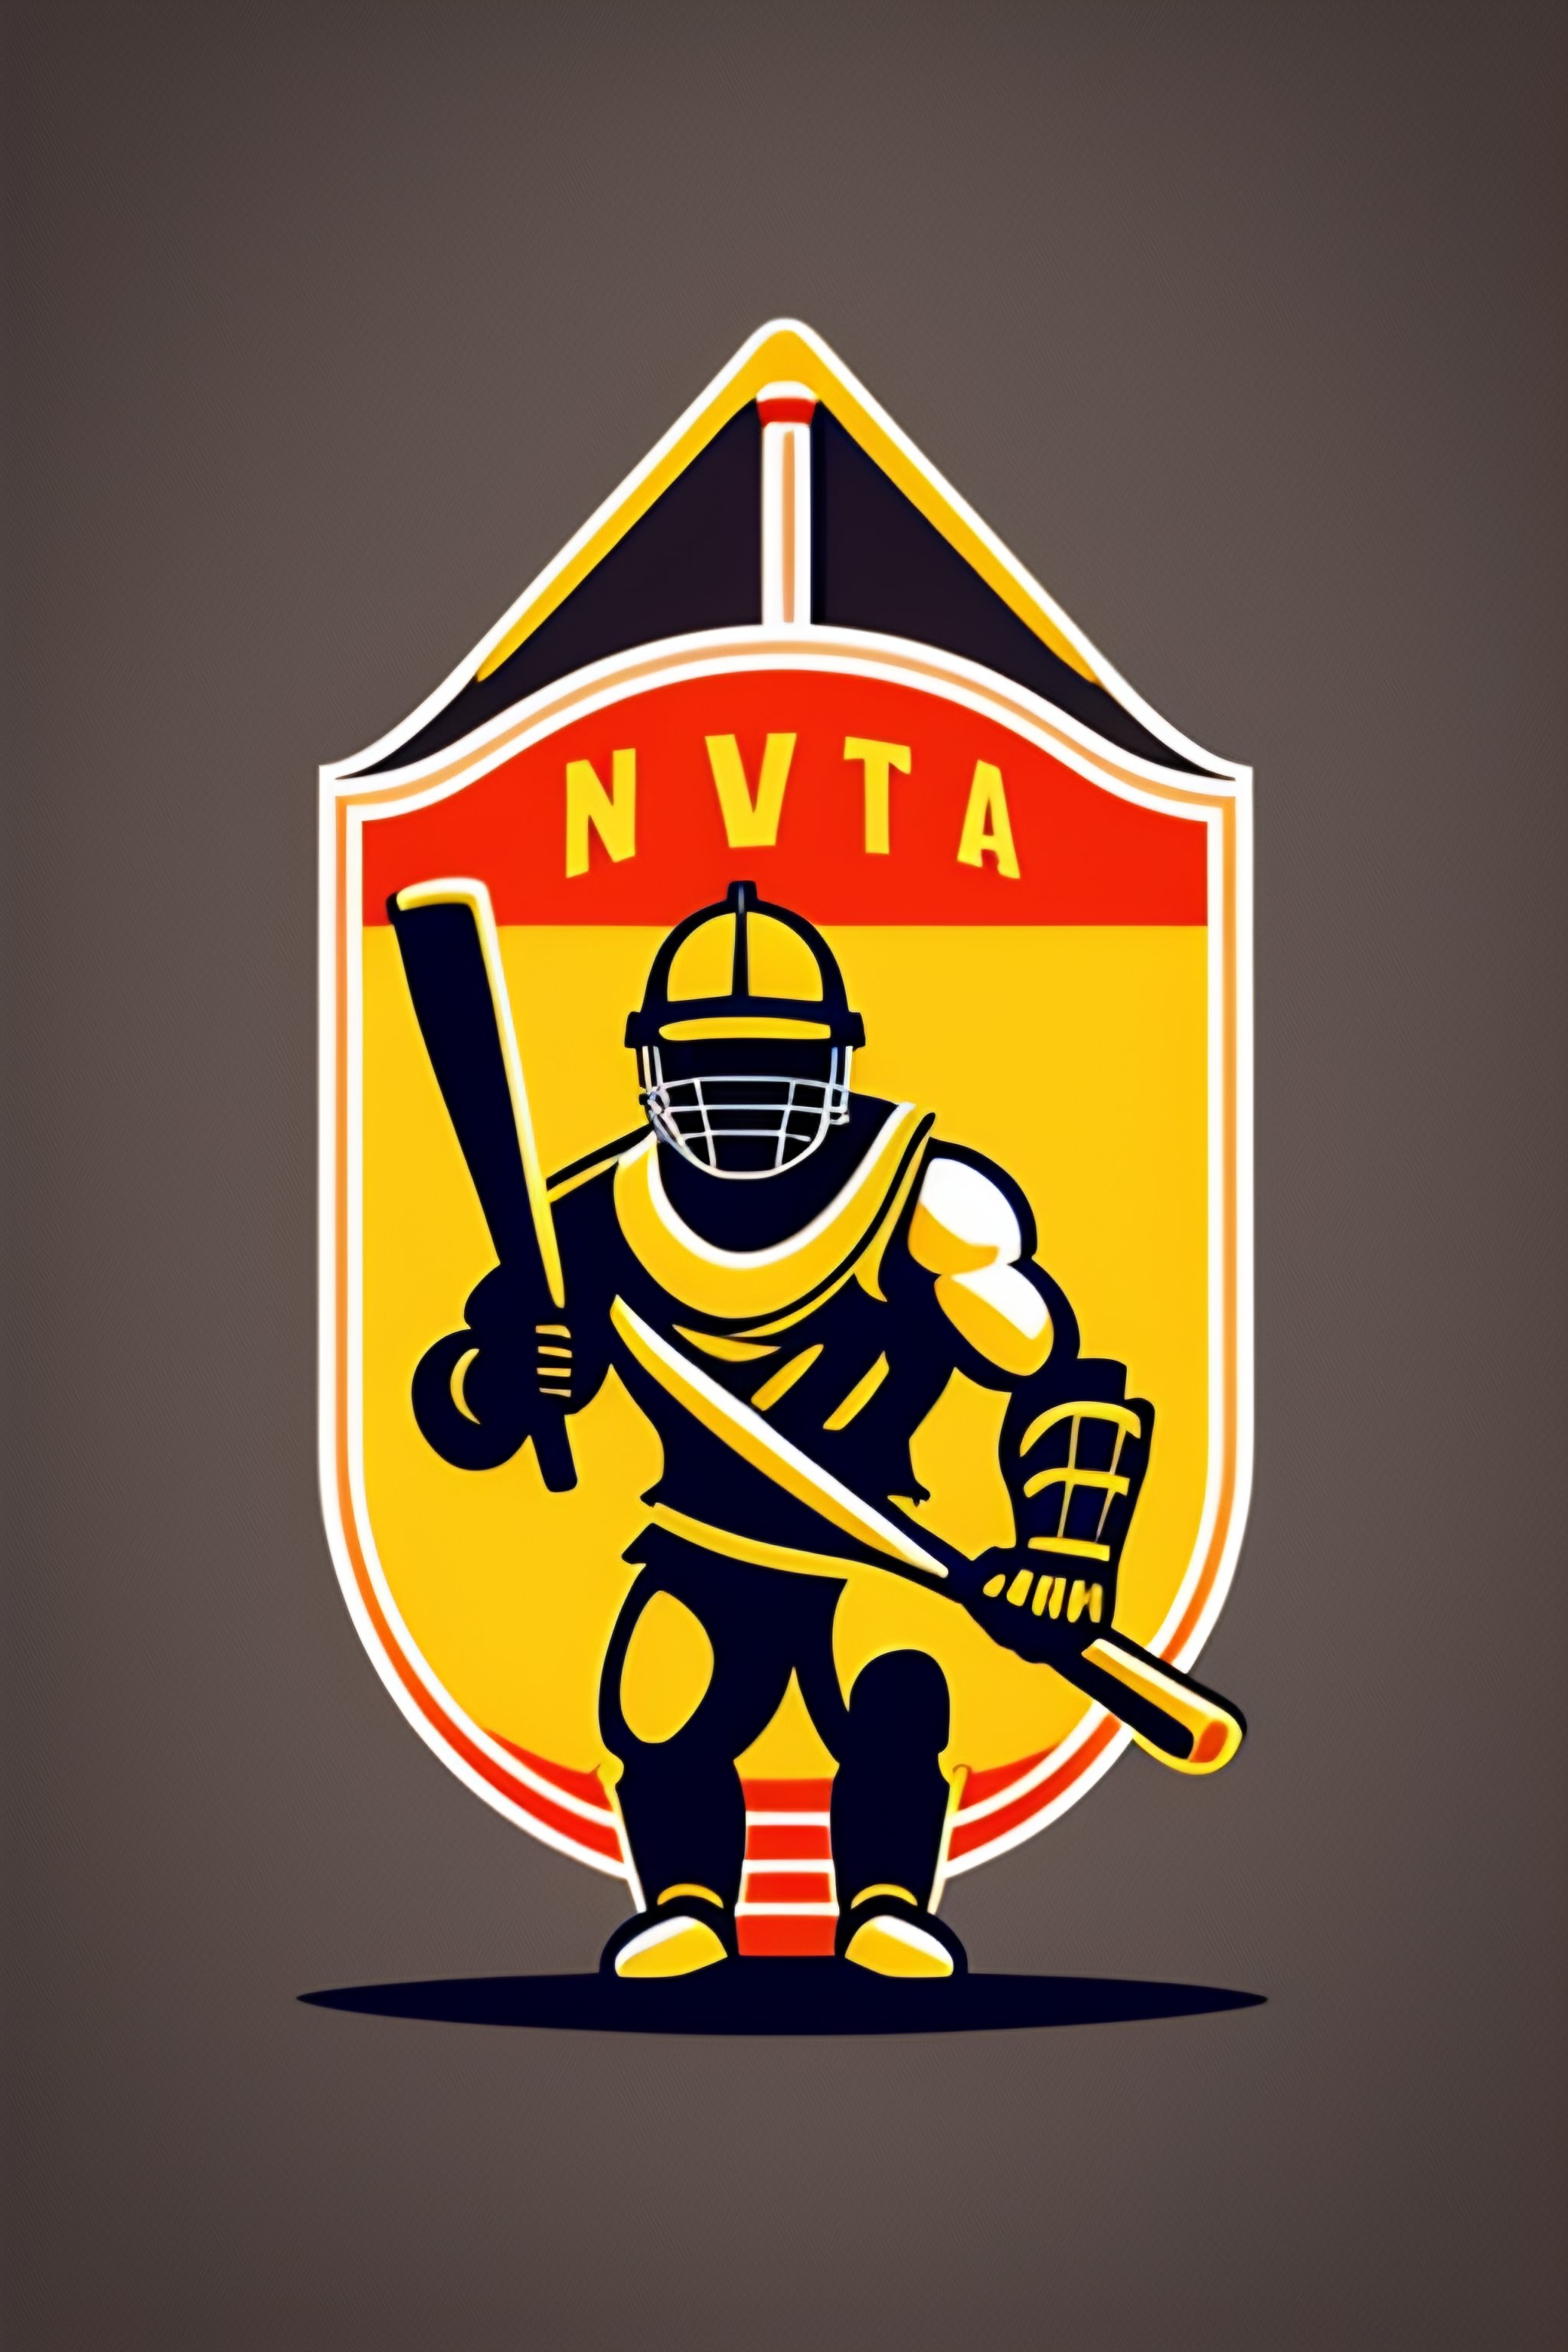 warriors cricket logo